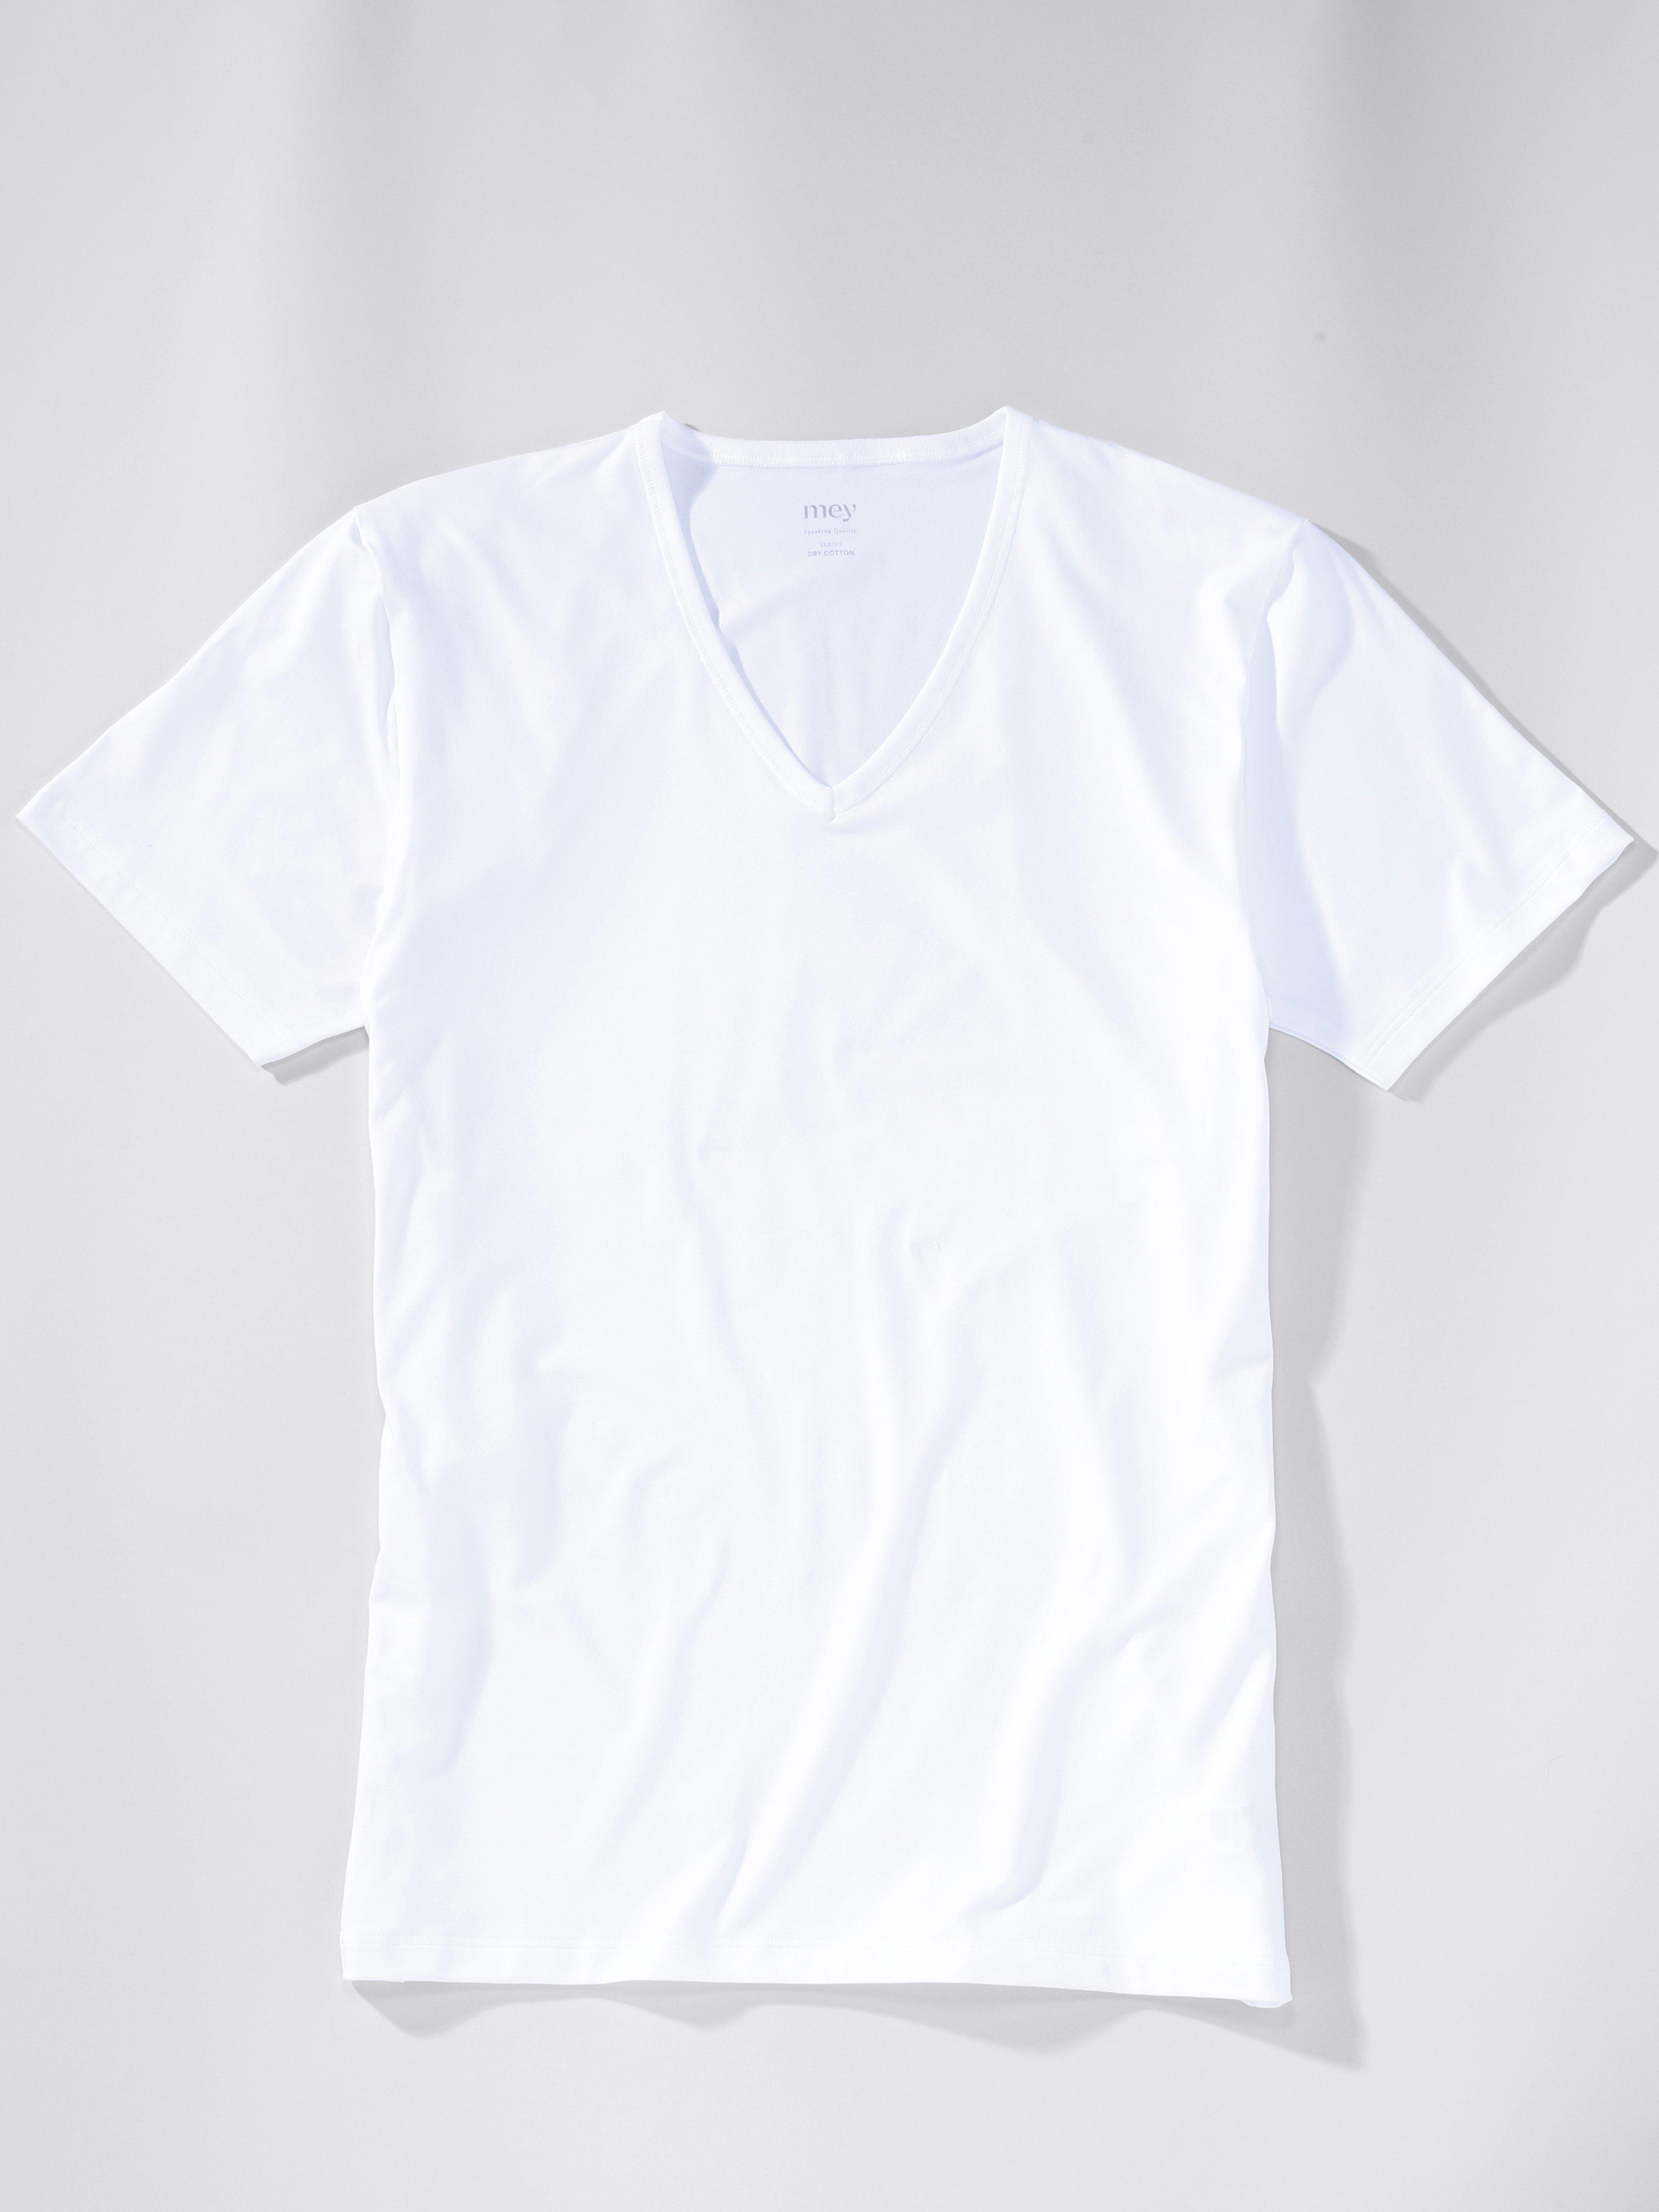 Le T-shirt en single jersey superfin  Mey blanc